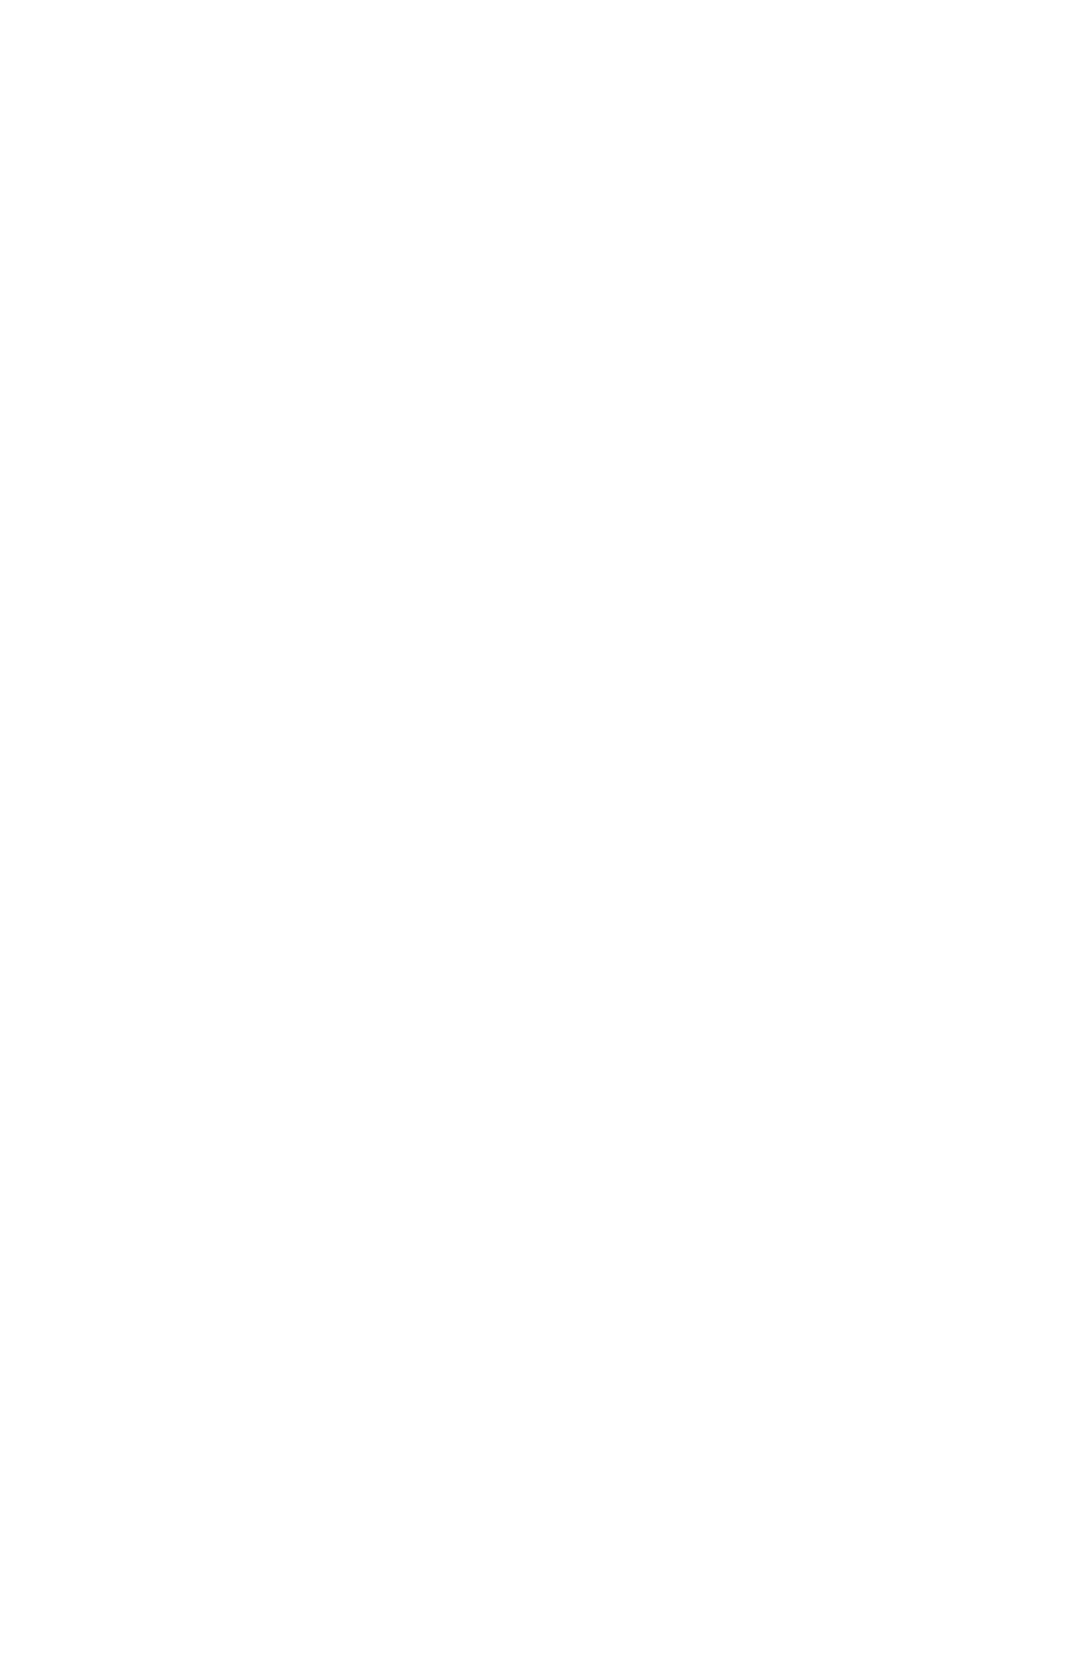 Sartorius logo pour fonds sombres (PNG transparent)